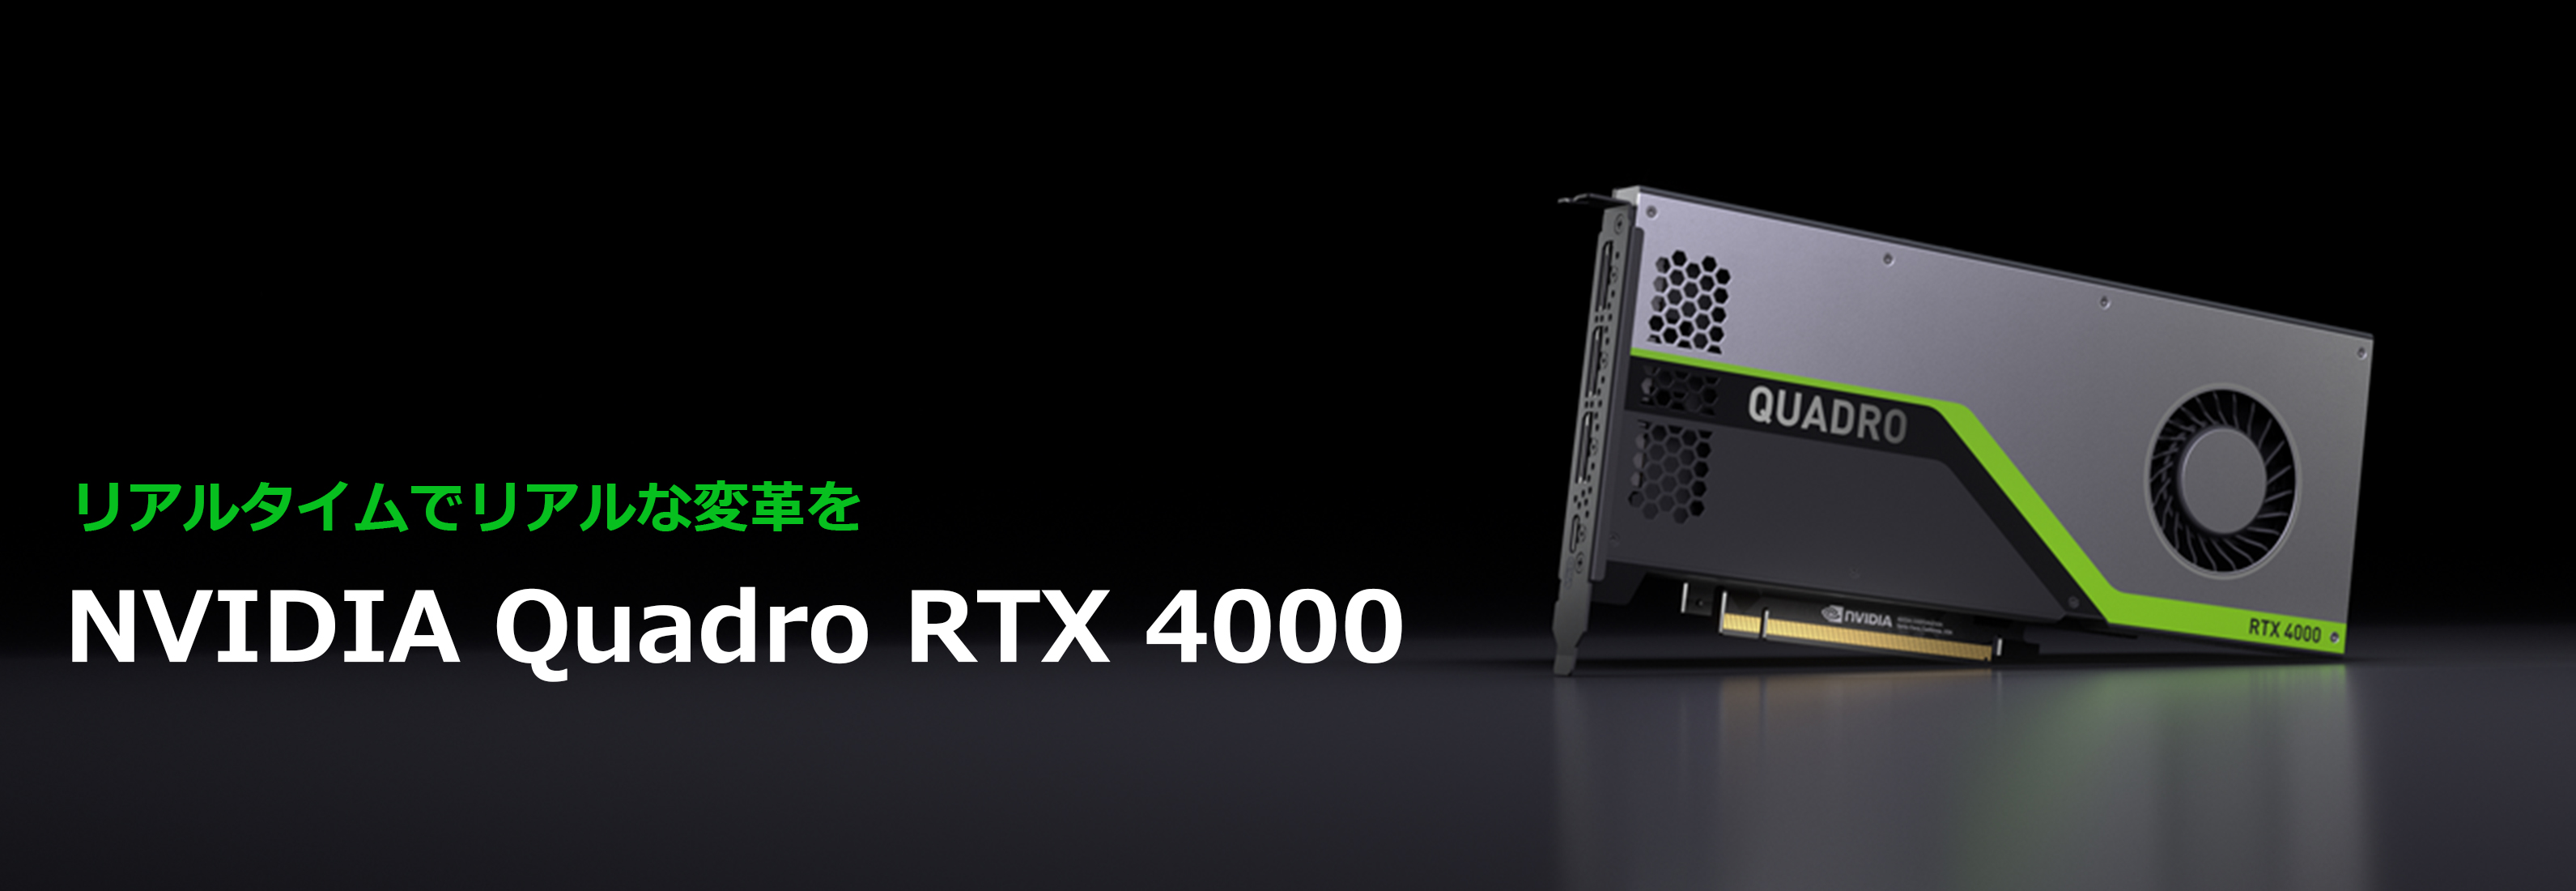 NVIDIA Quadro RTX4000 | 菱洋エレクトロ株式会社 - NVIDIA製品情報